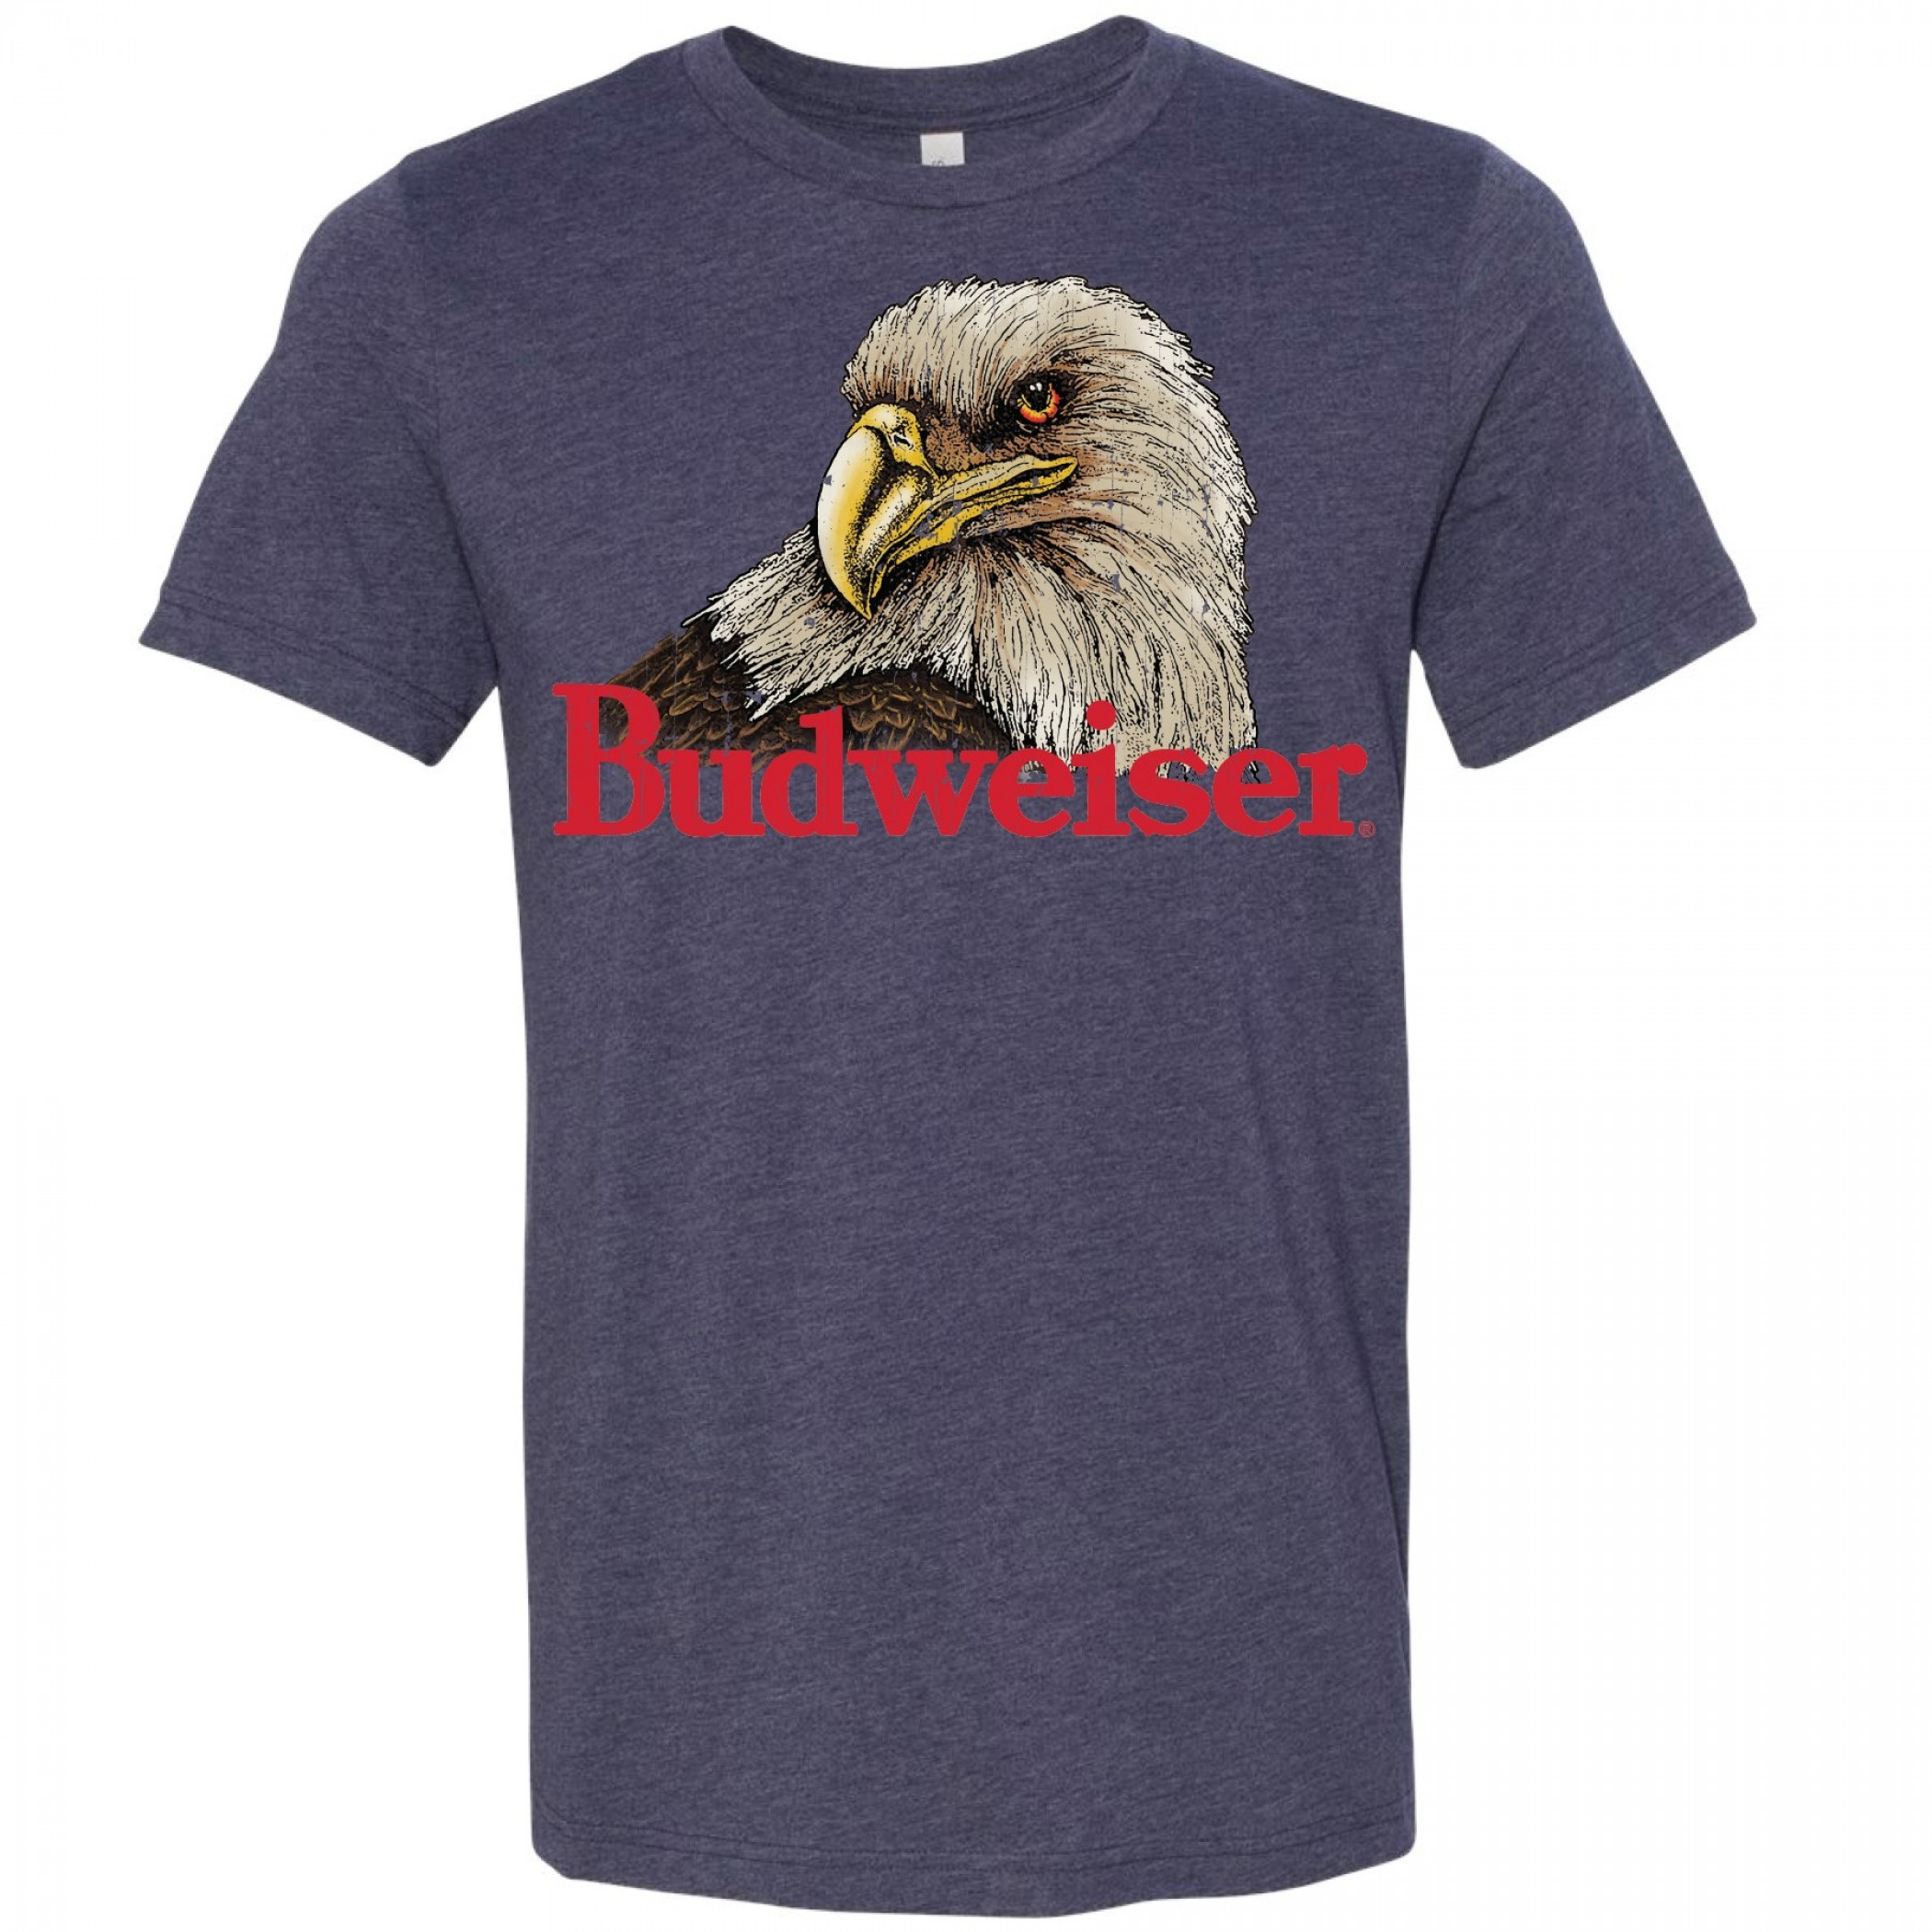 Budweiser Eagle T-Shirt